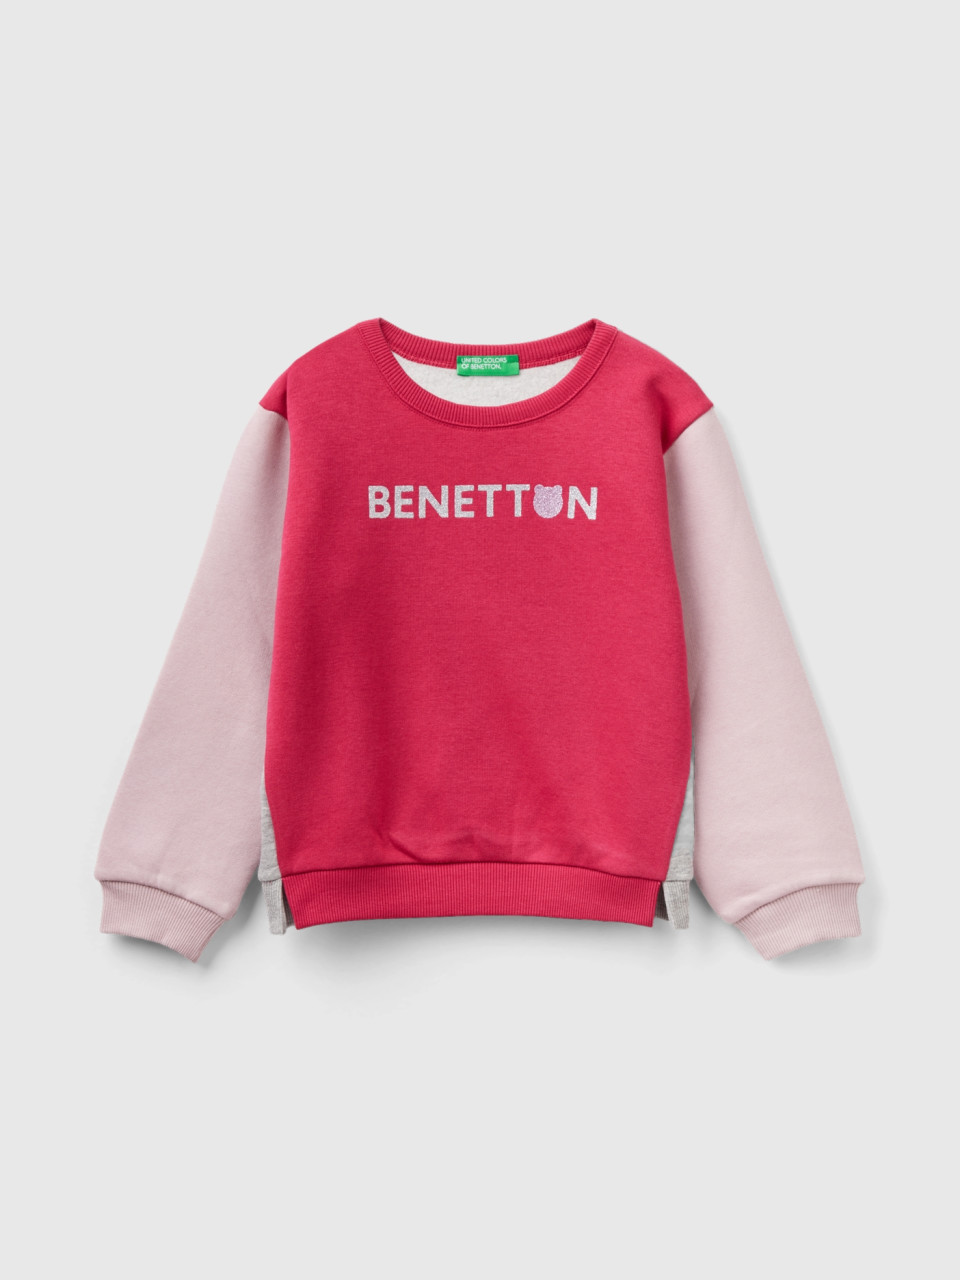 Benetton, Pullover Sweatshirt With Glittery Print, Multi-color, Kids